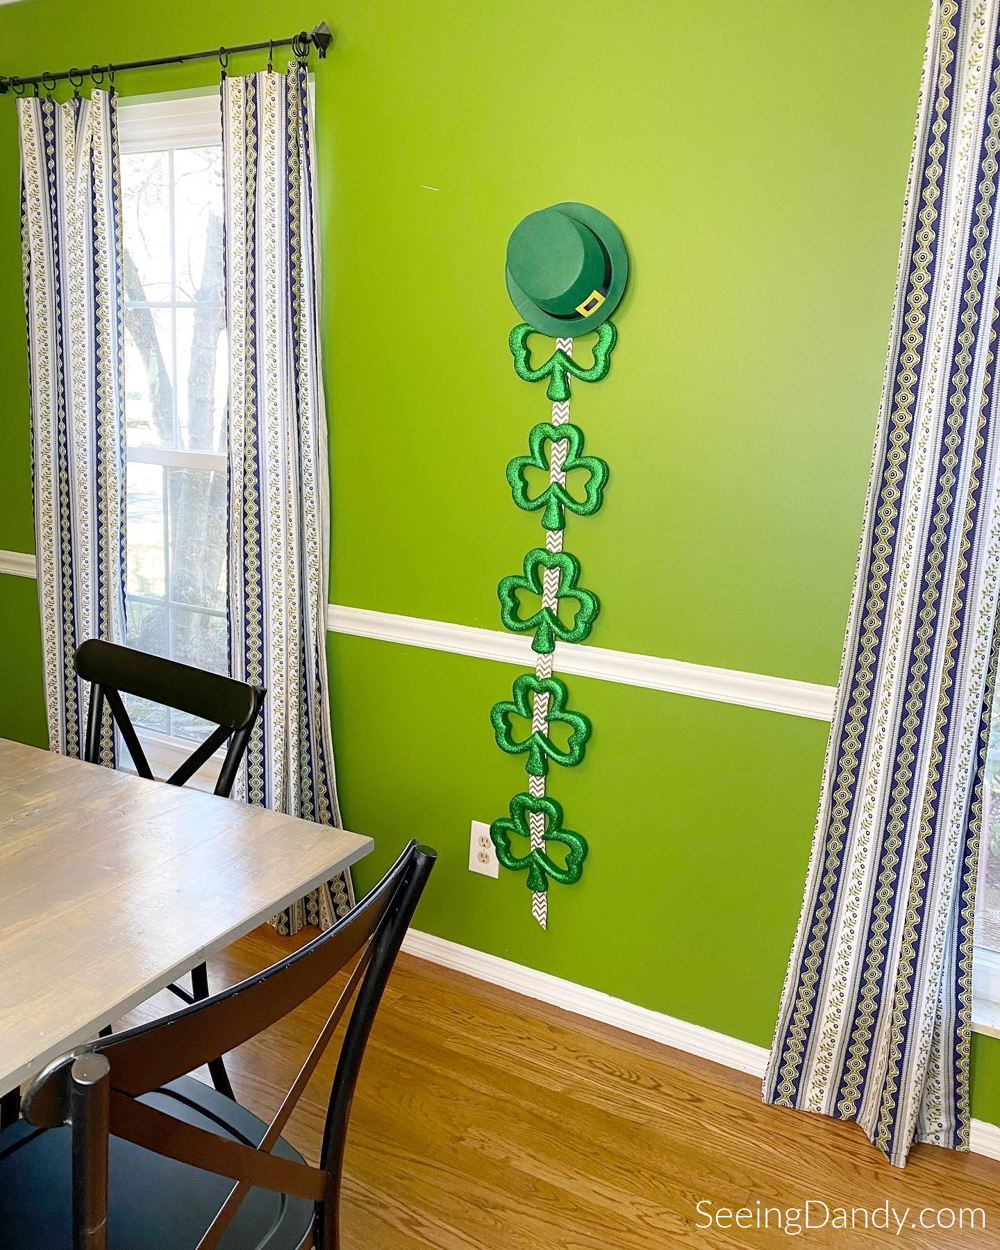 DIY leprechaun wall decor